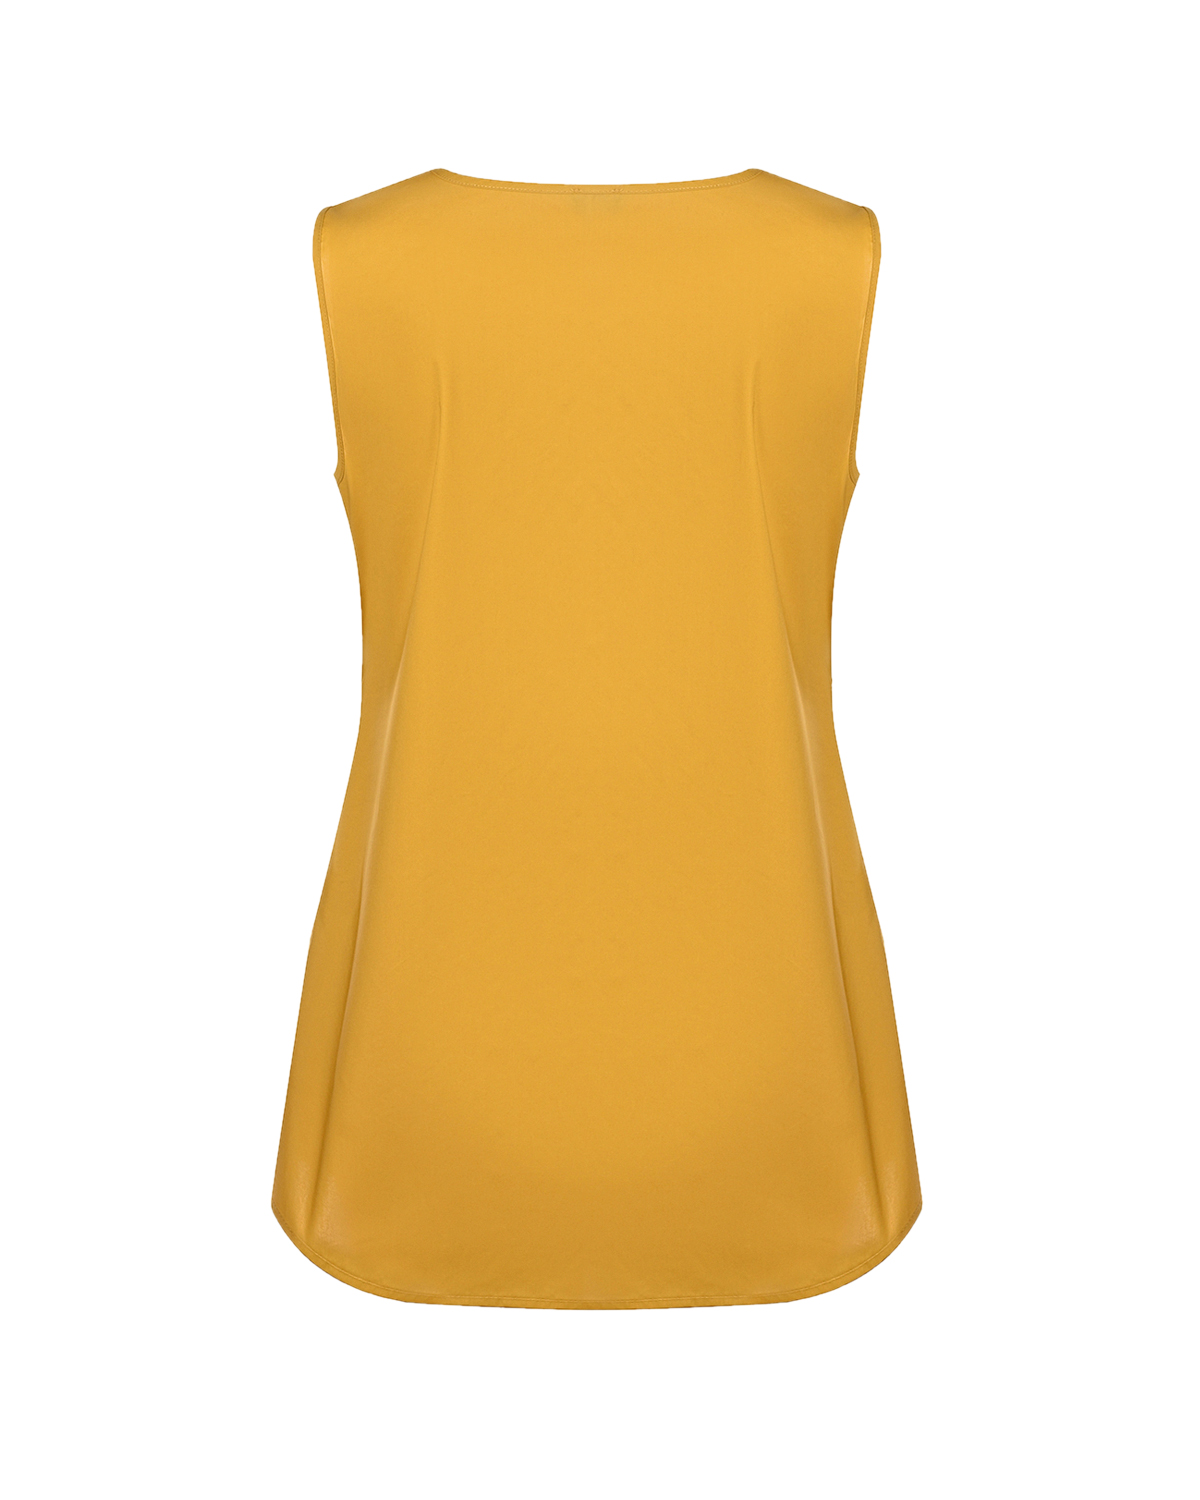 Желтая блуза без рукавов Attesa, размер 38, цвет желтый - фото 2